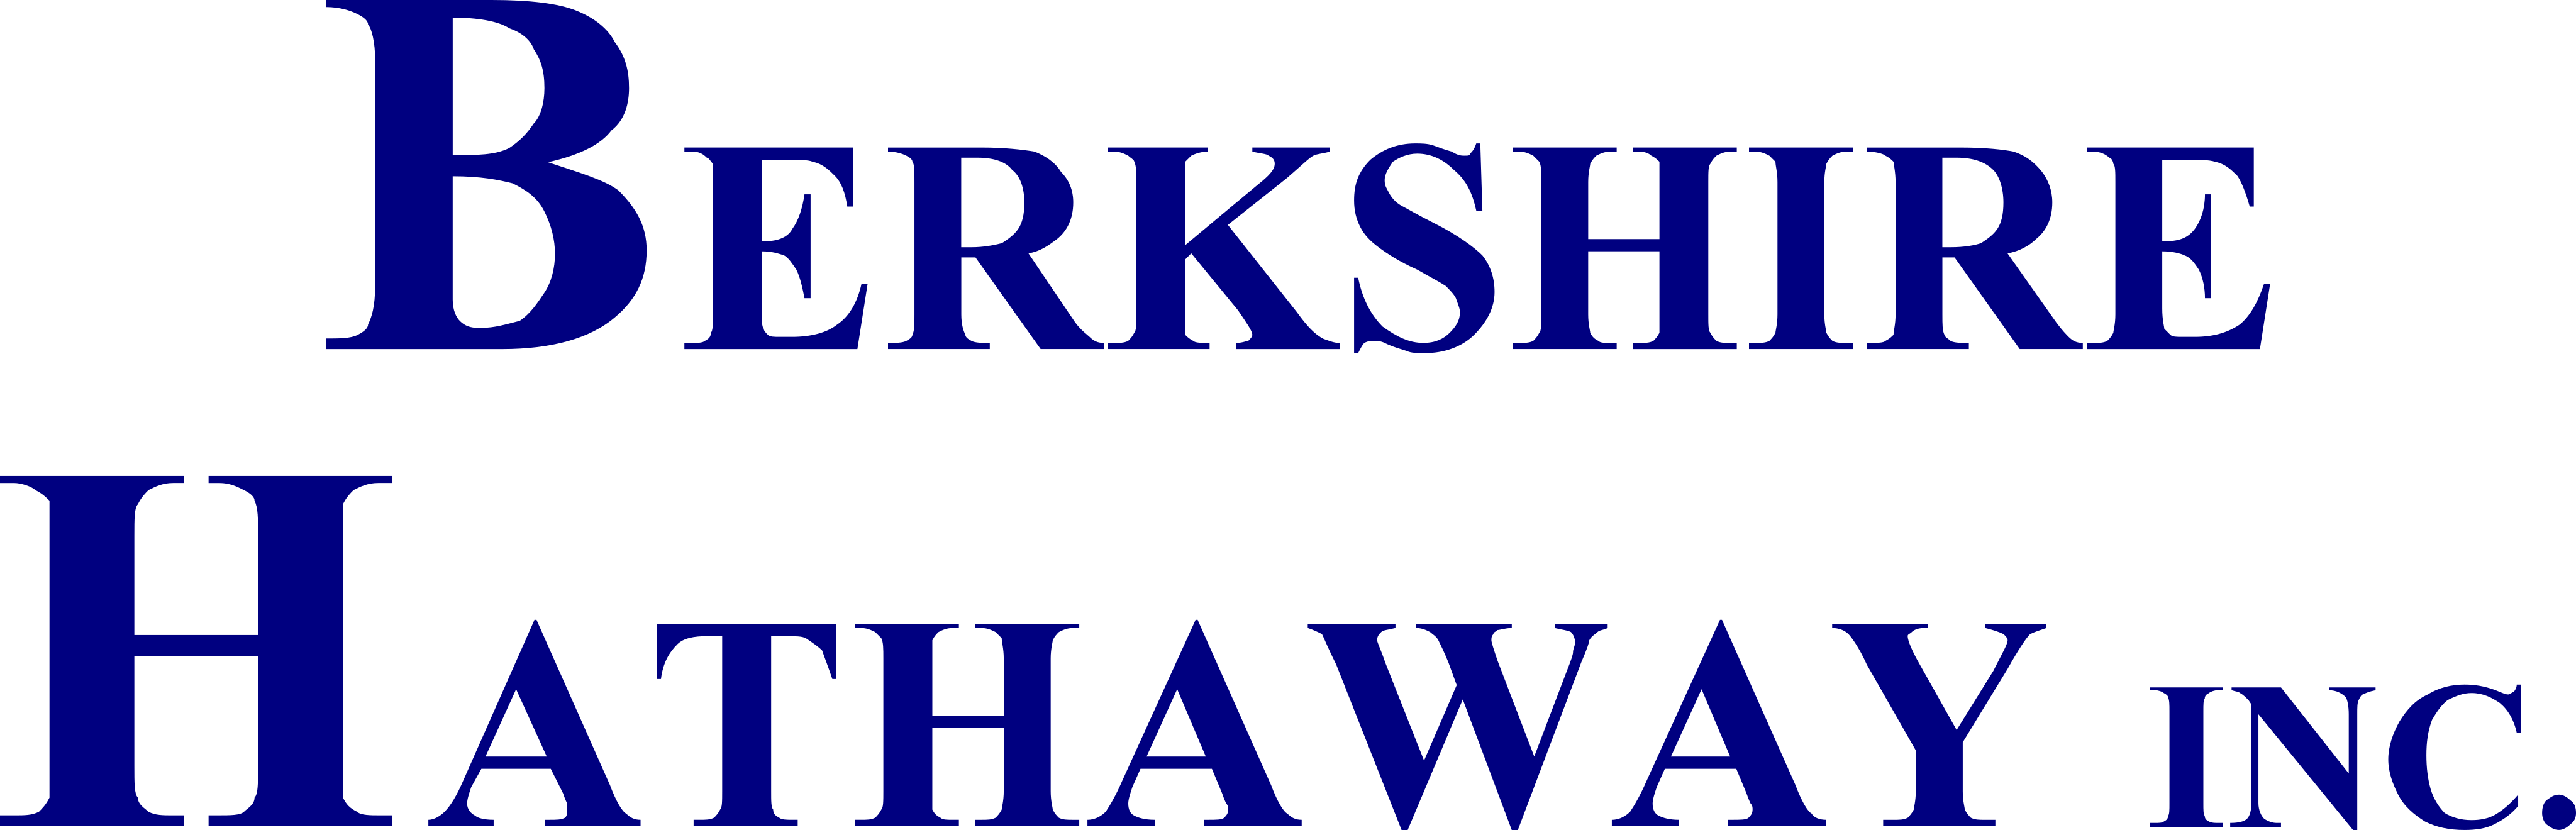 Logo Hathaway Berkshire Free Download PNG HD PNG Image